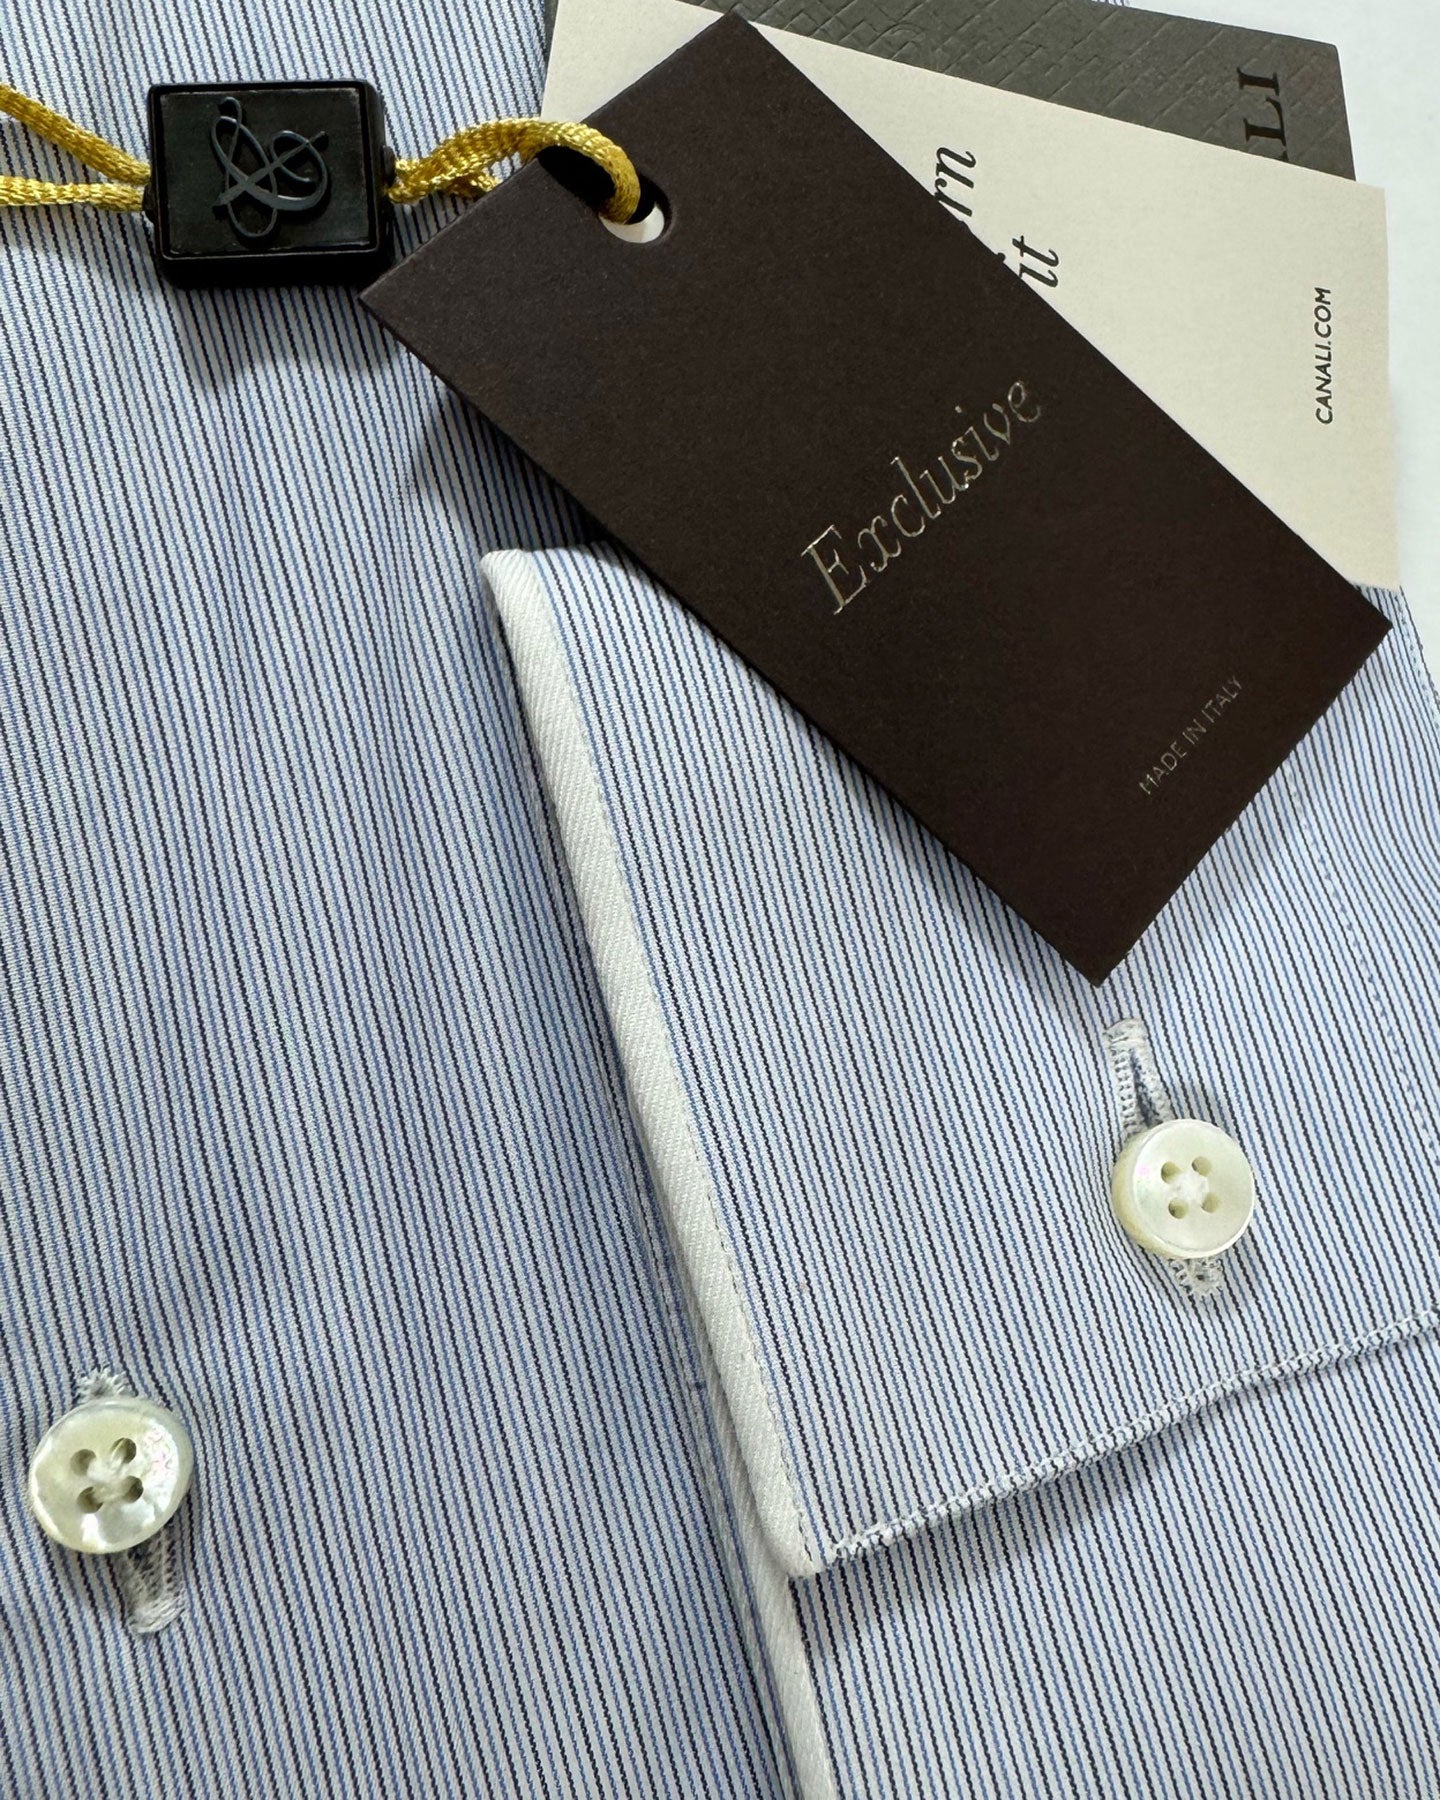 Canali Dress Shirt Exclusive White Navy Blue Stripes 